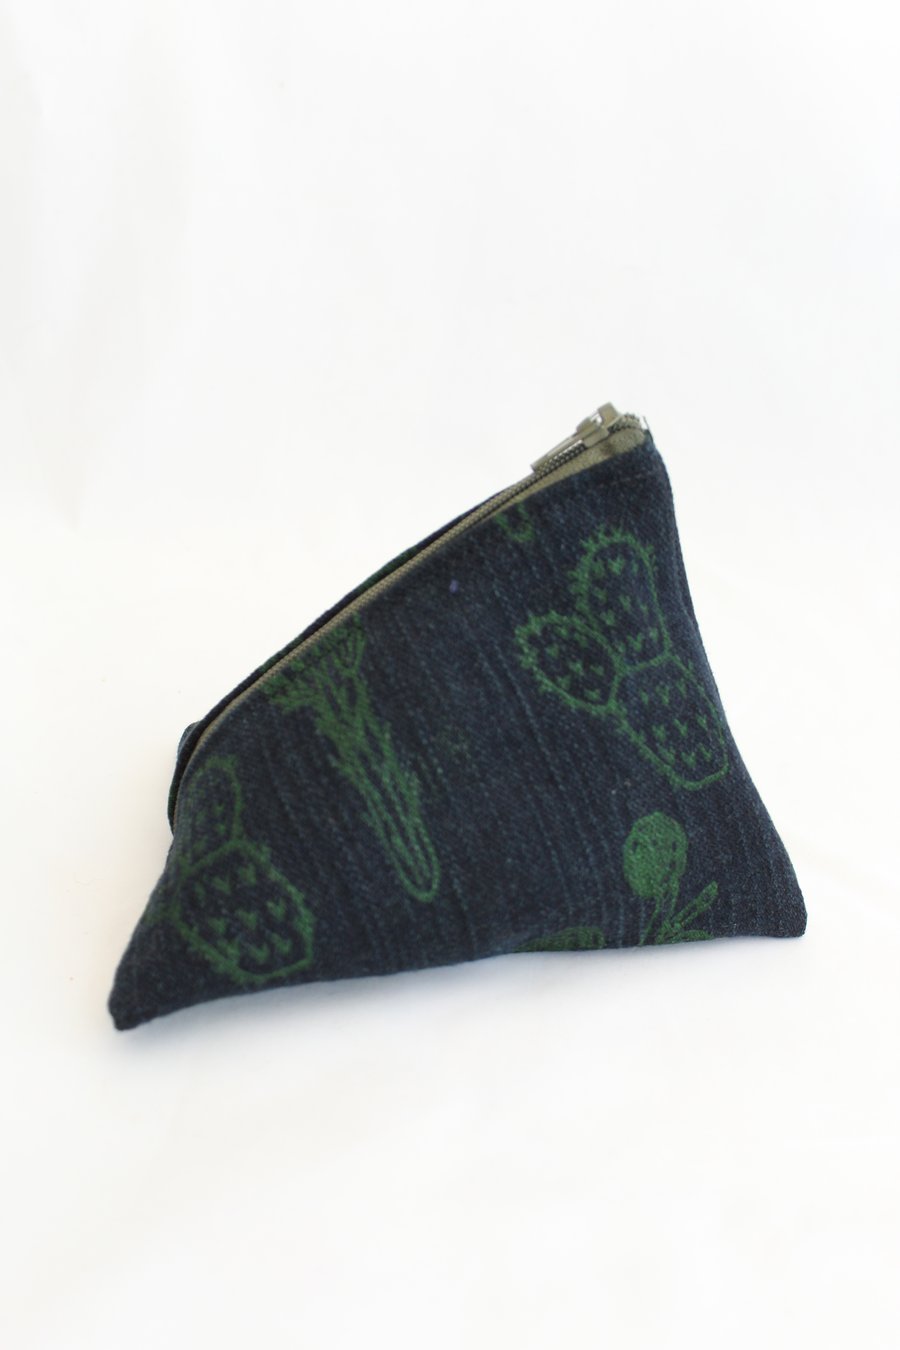 Denim pyramid purse, triangular green cactus print,Eco coin key pouch